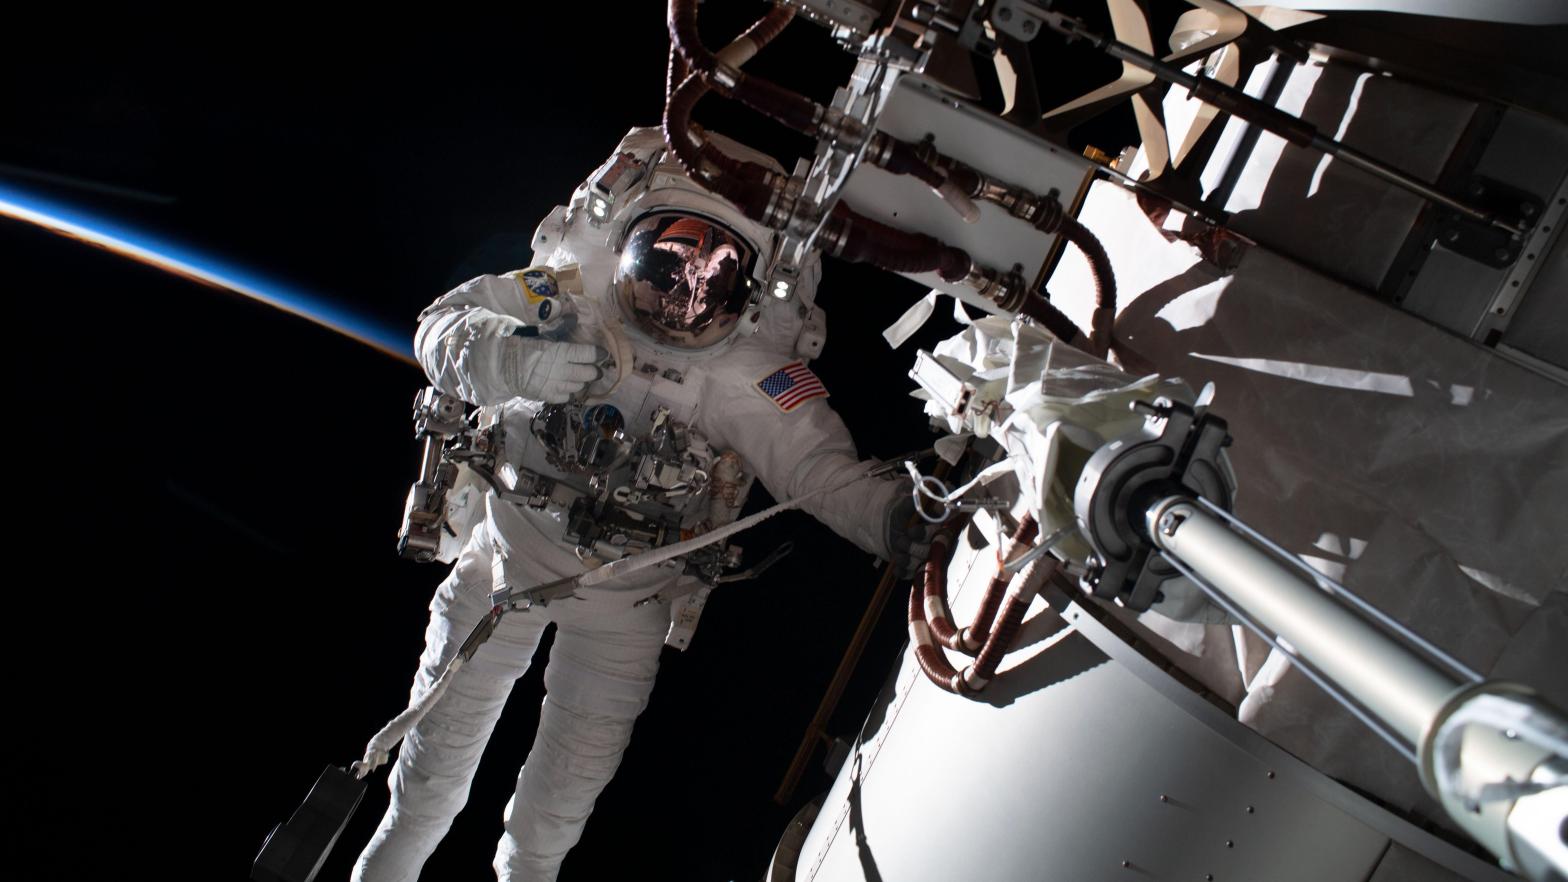 NASA Astronaut Frank Rubio during a spacewalk outside the ISS on November 15. (Photo: NASA)